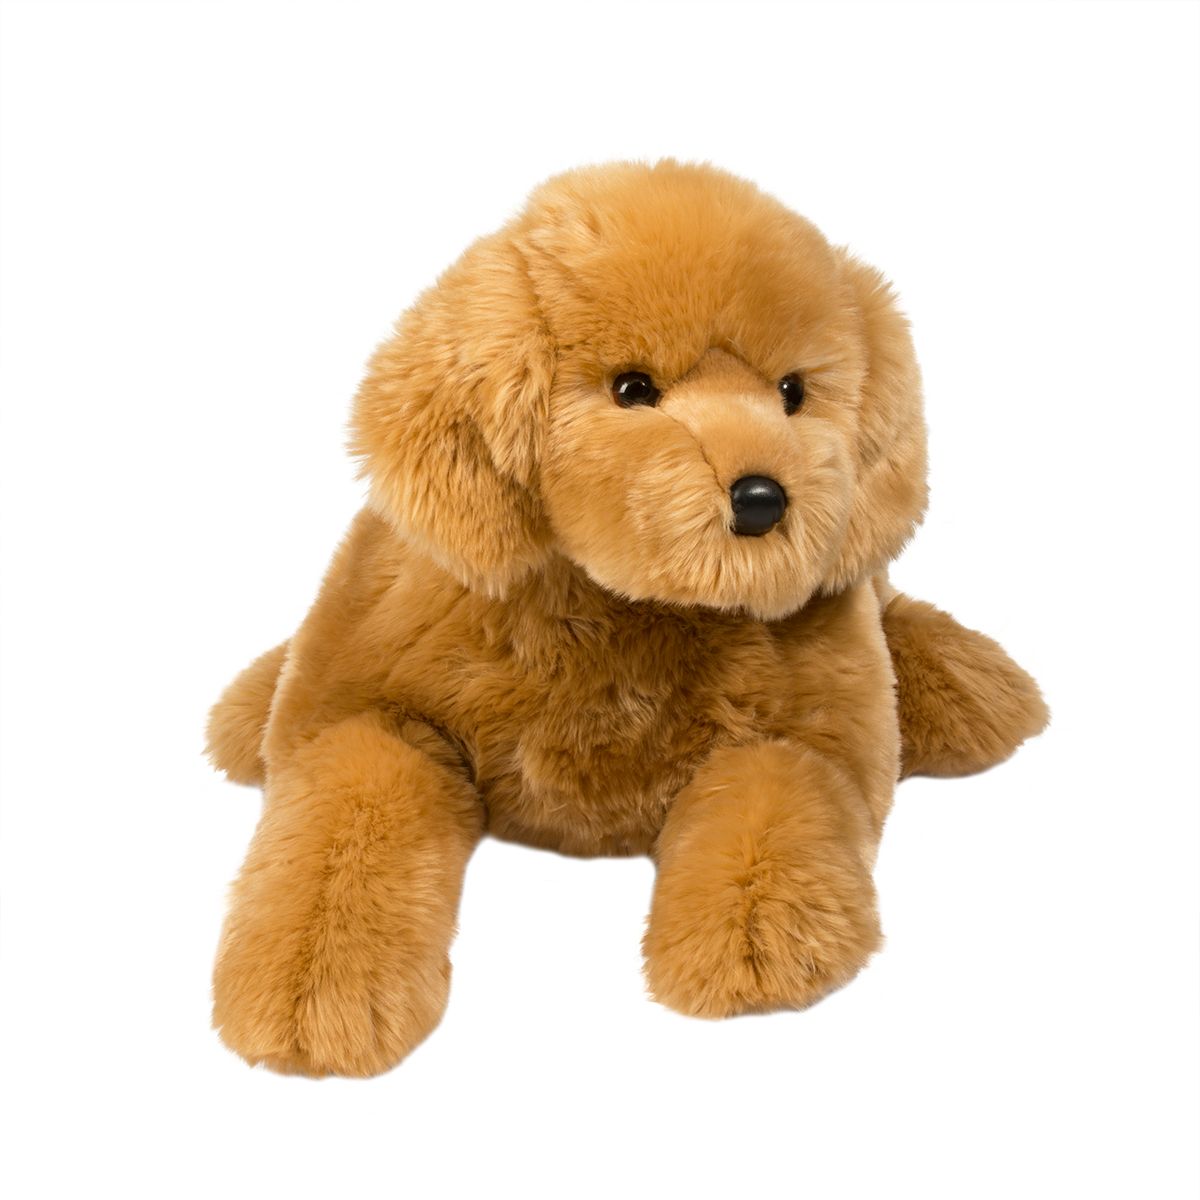 Douglas Golden Retriever Plush Stuffed Animal 16